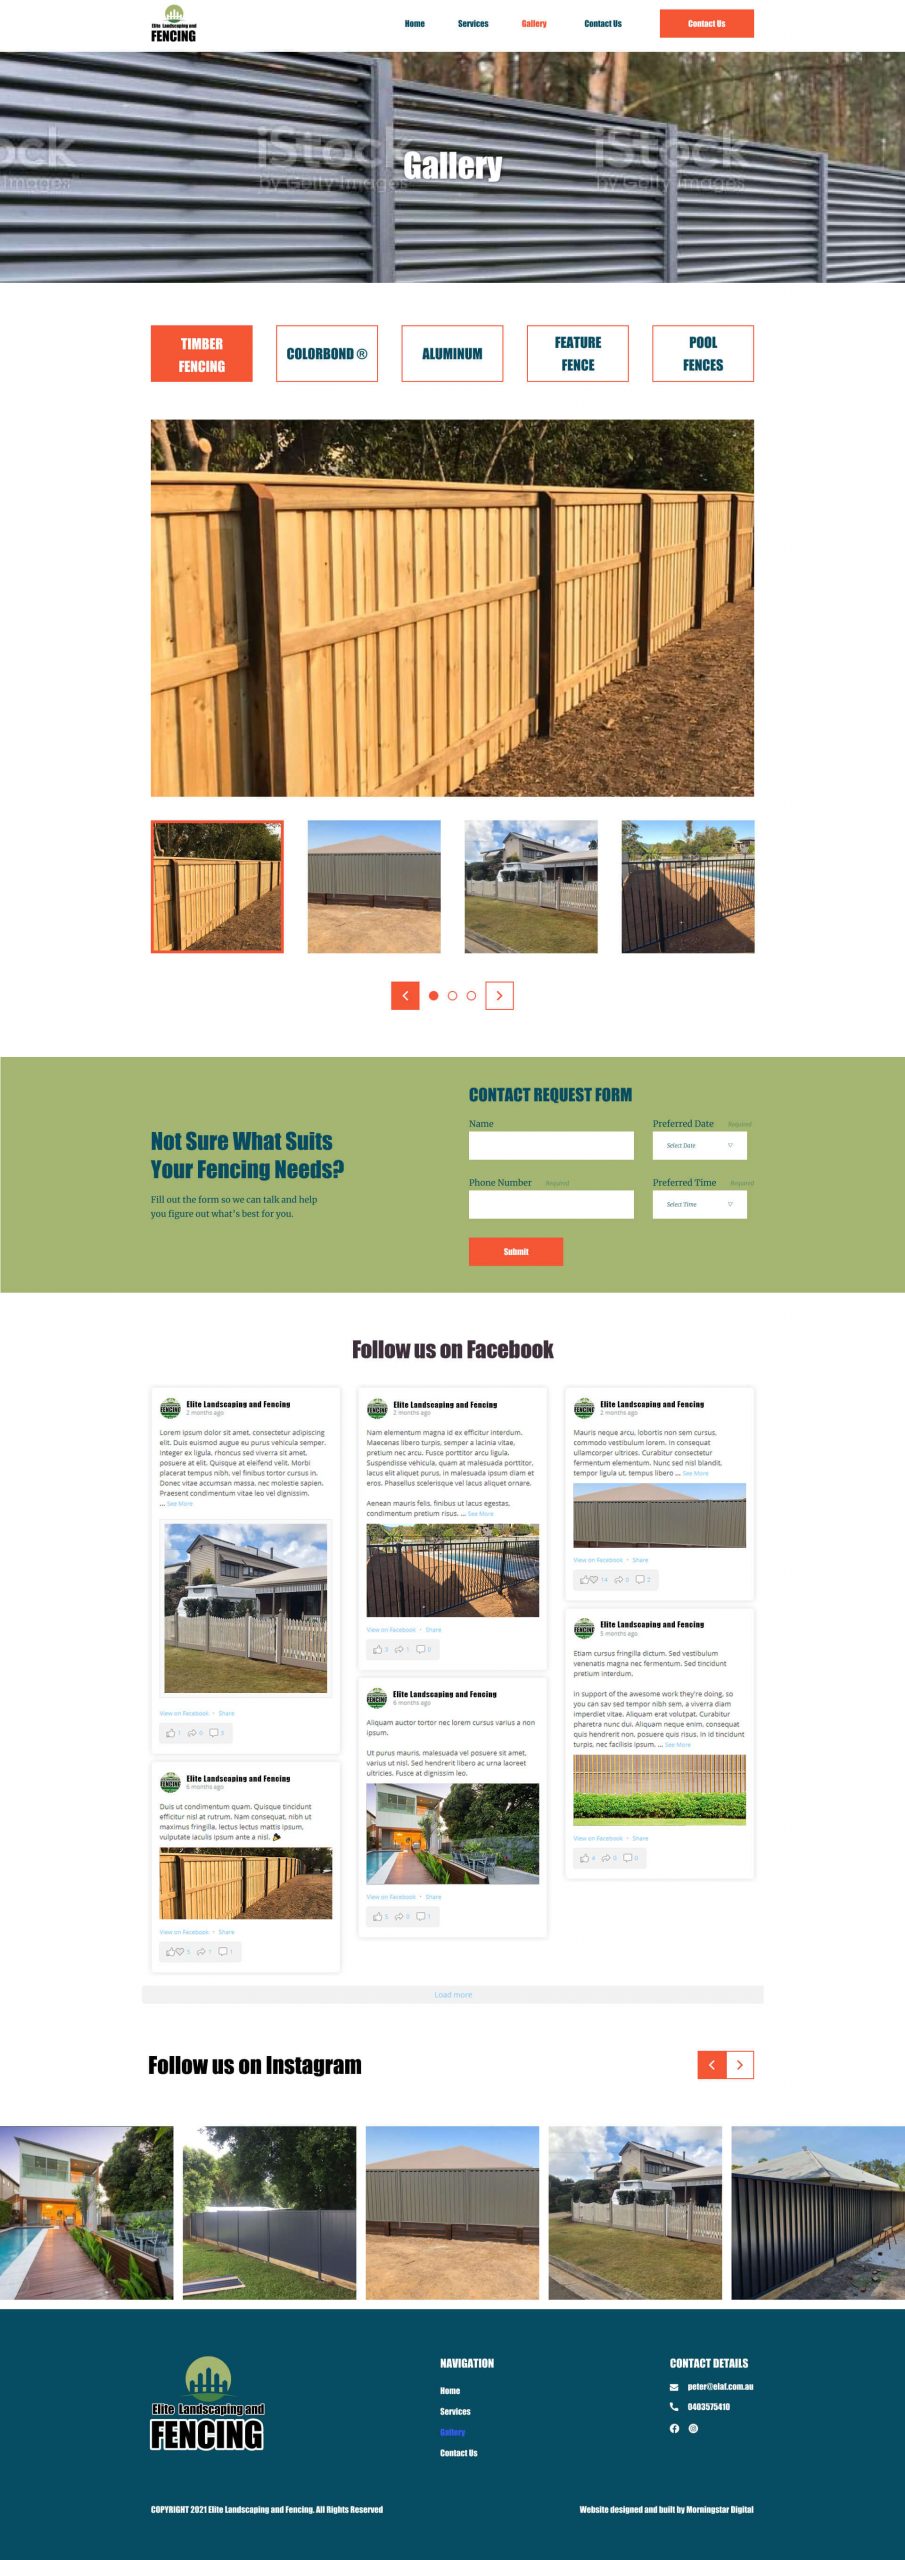 Elite-Landscaping-And-Fencing_Webmockup_Gallery_Mstar